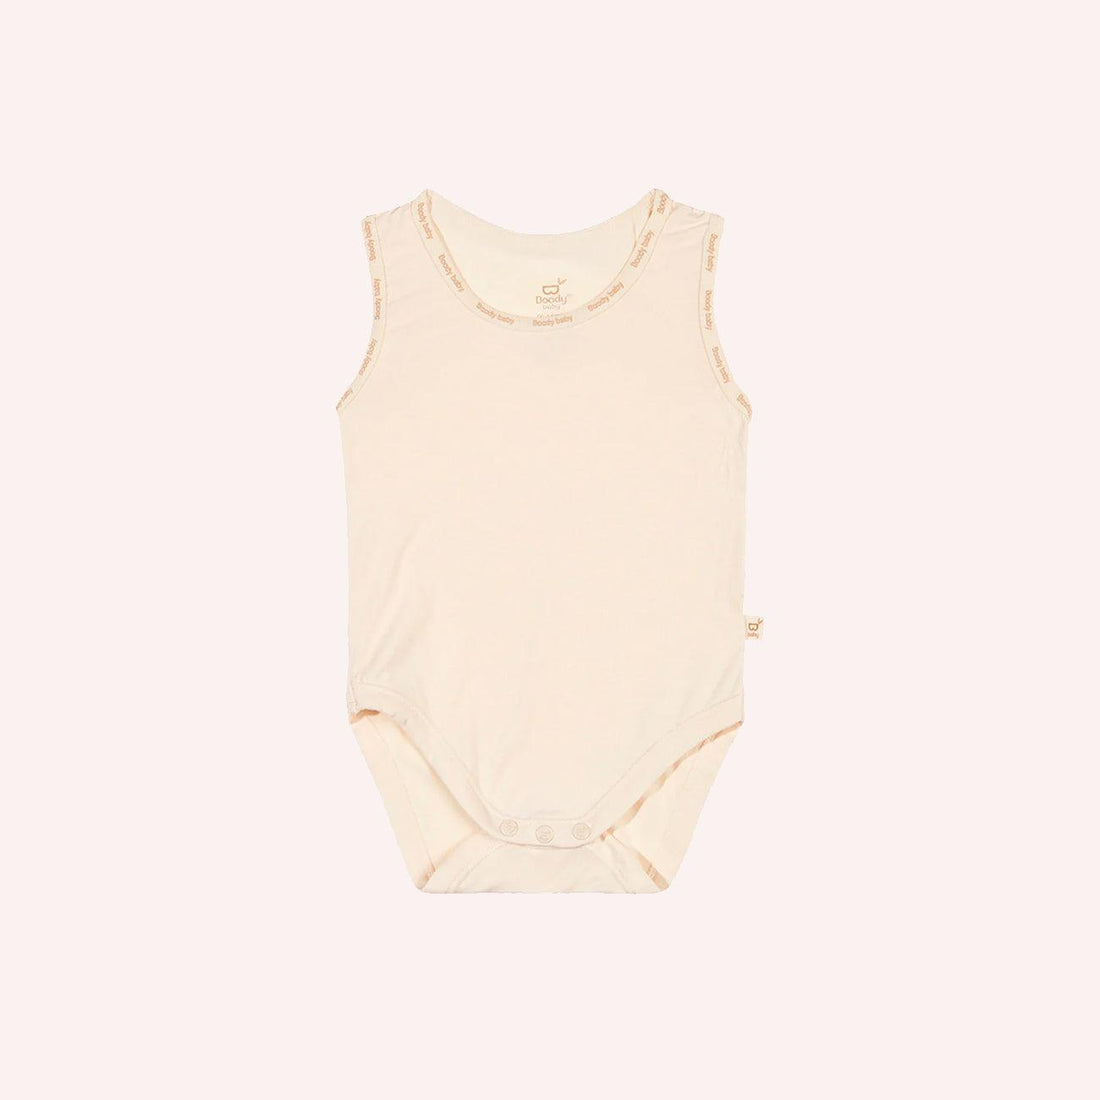 Baby Sleevless Body Suit - Chalk